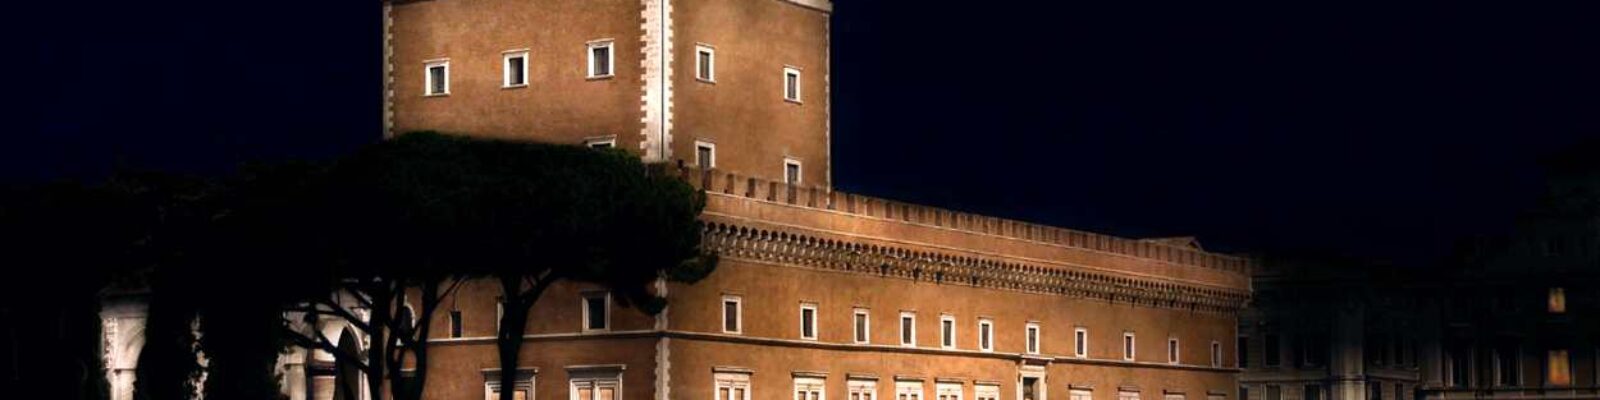 Rome Venezia Palace illuminazione esterna notturna